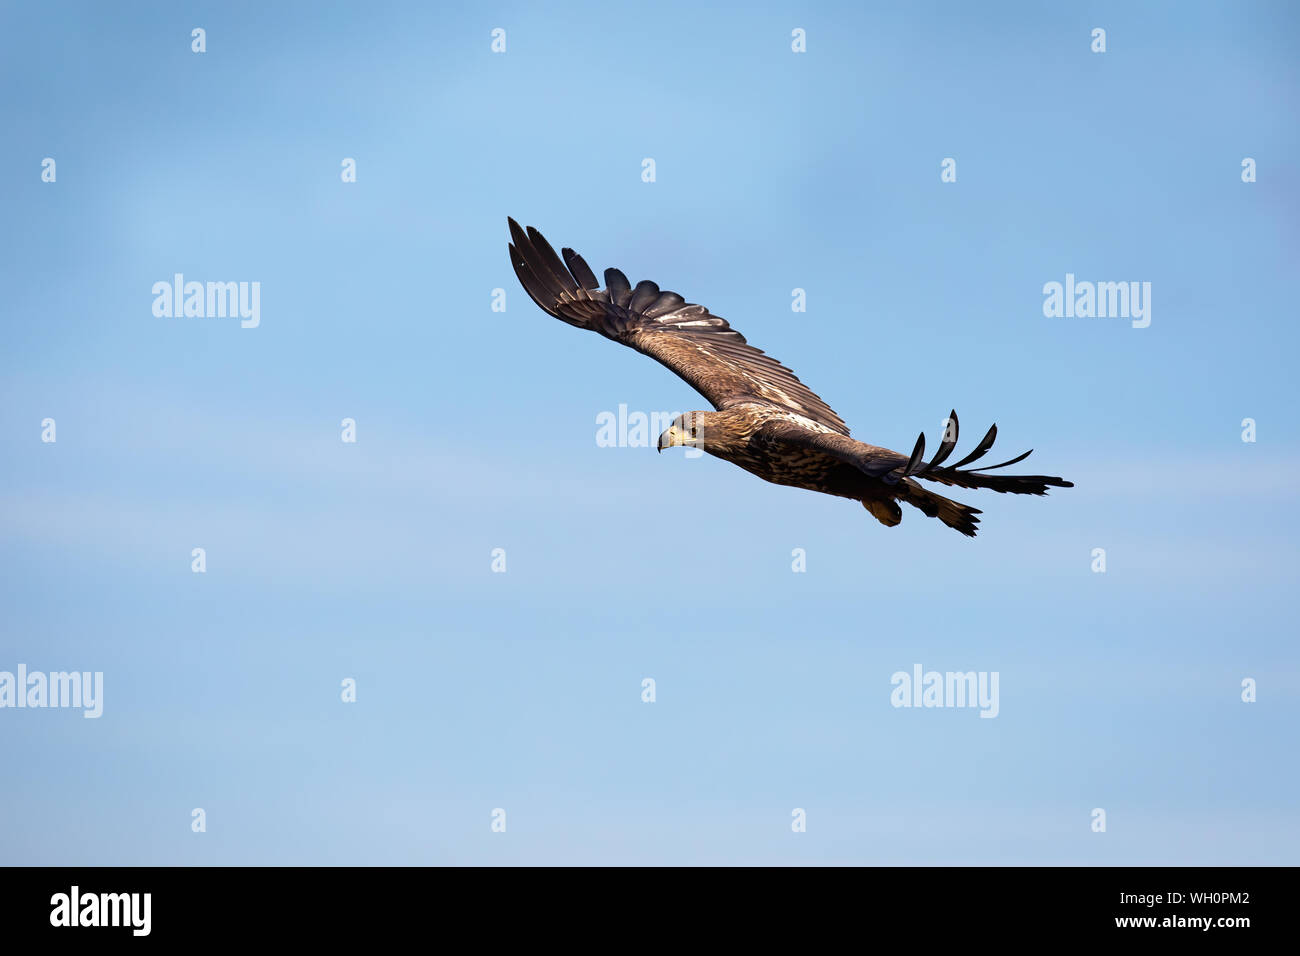 Juvenile white-tailed eagle flying against blue sky at sunrise. Stock Photo